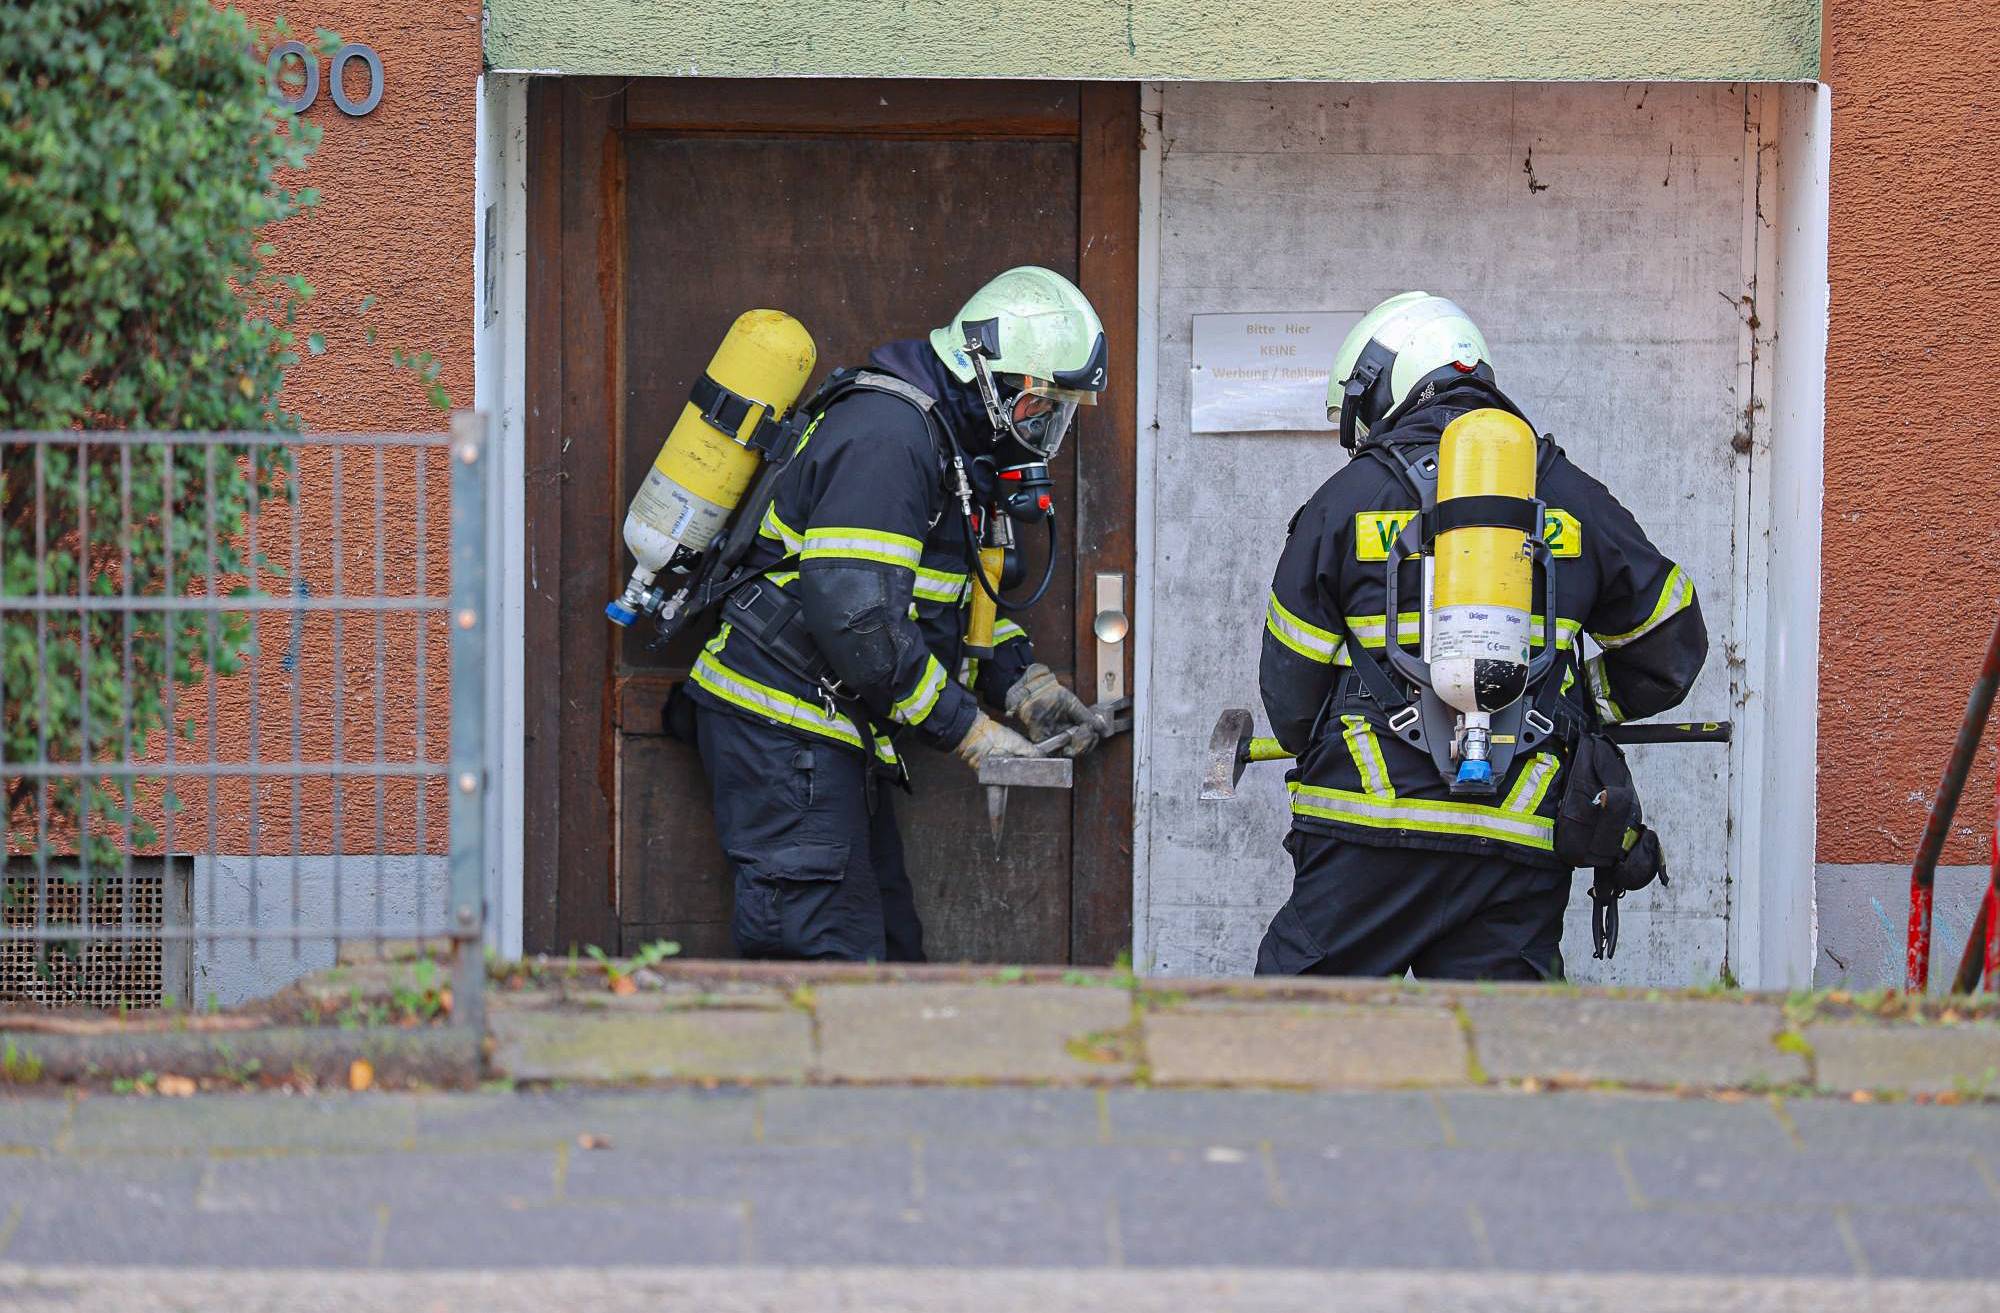 Unrat brennt in leerem Mehrfamilienhaus in Wuppertal-Barmen